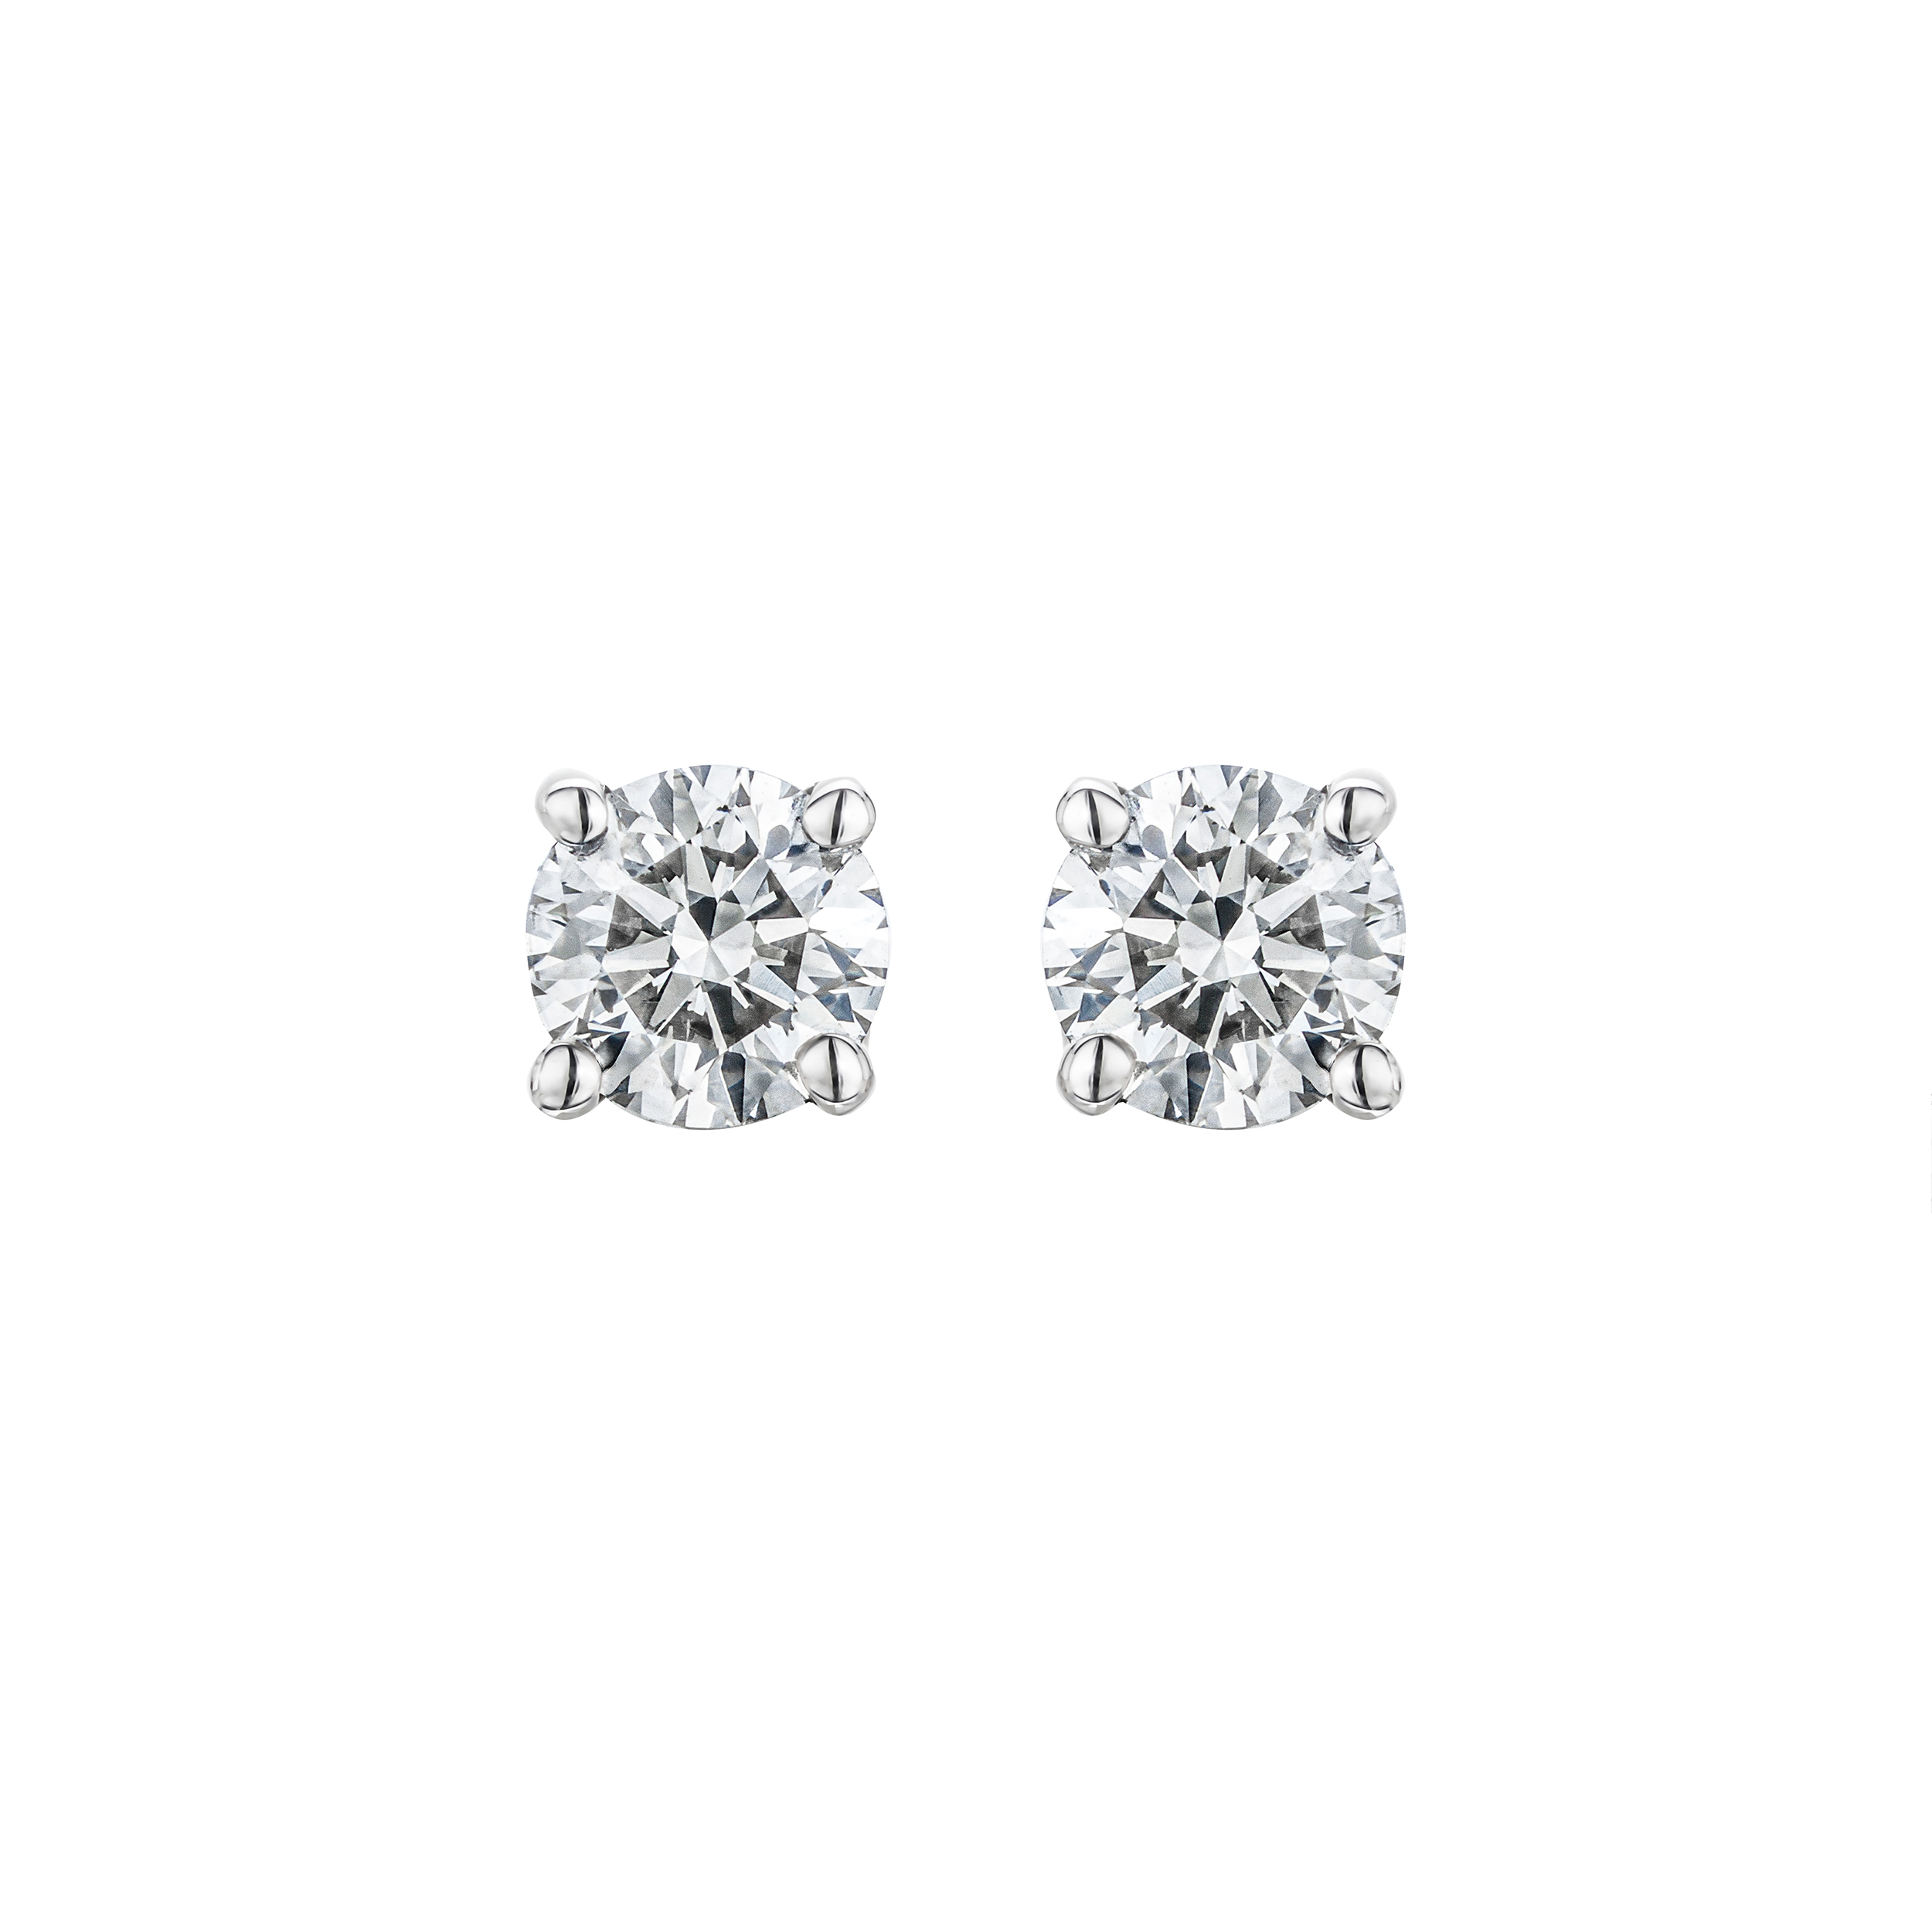 Diamond Earrings 0.20CT Studs Premium Quality in 18K White Gold - 3mm